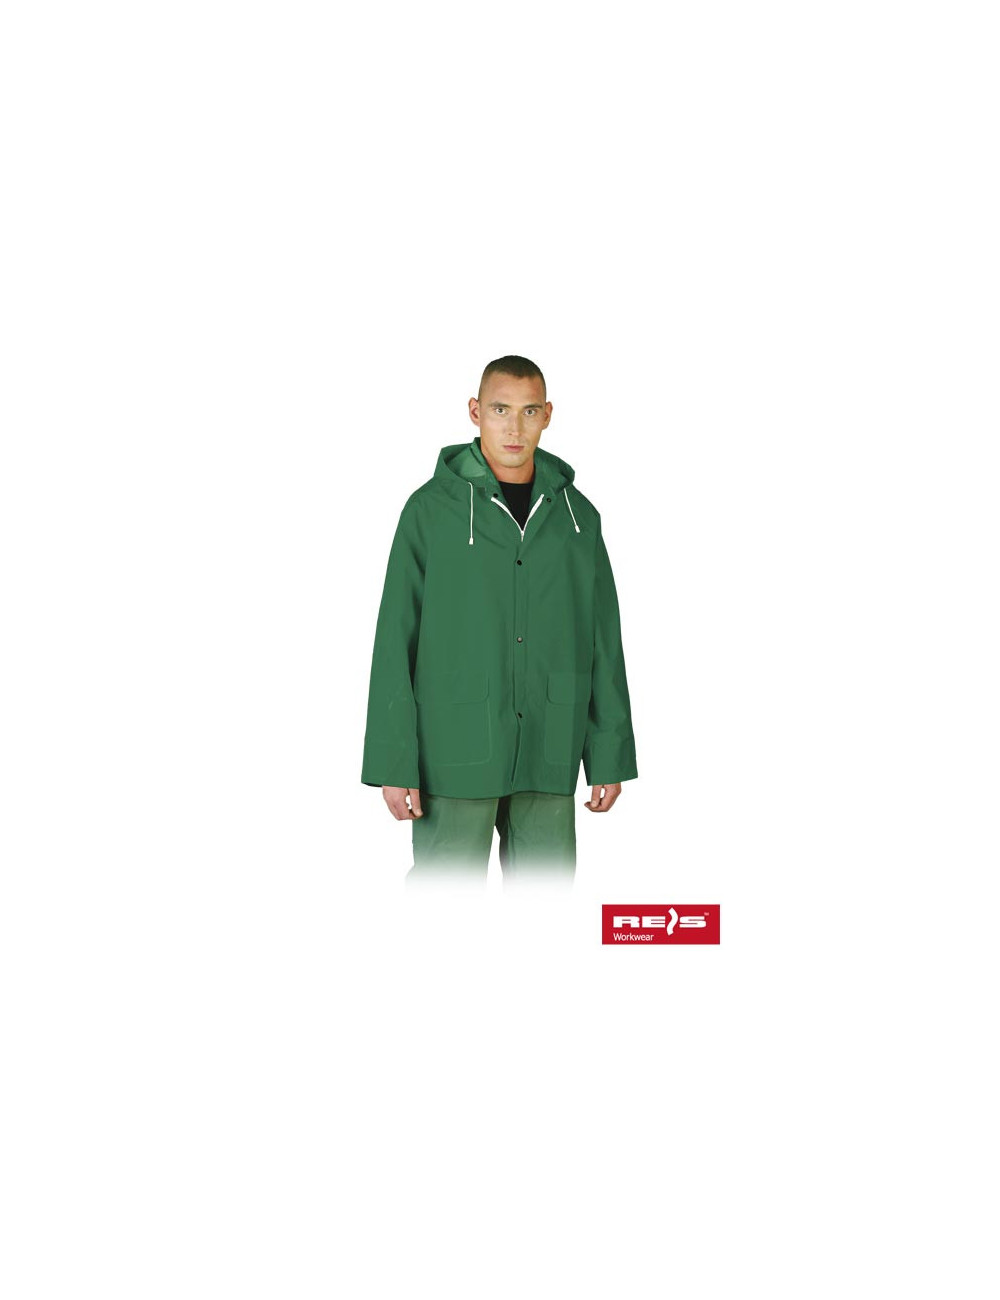 Protective kpd rain jacket with green Reis